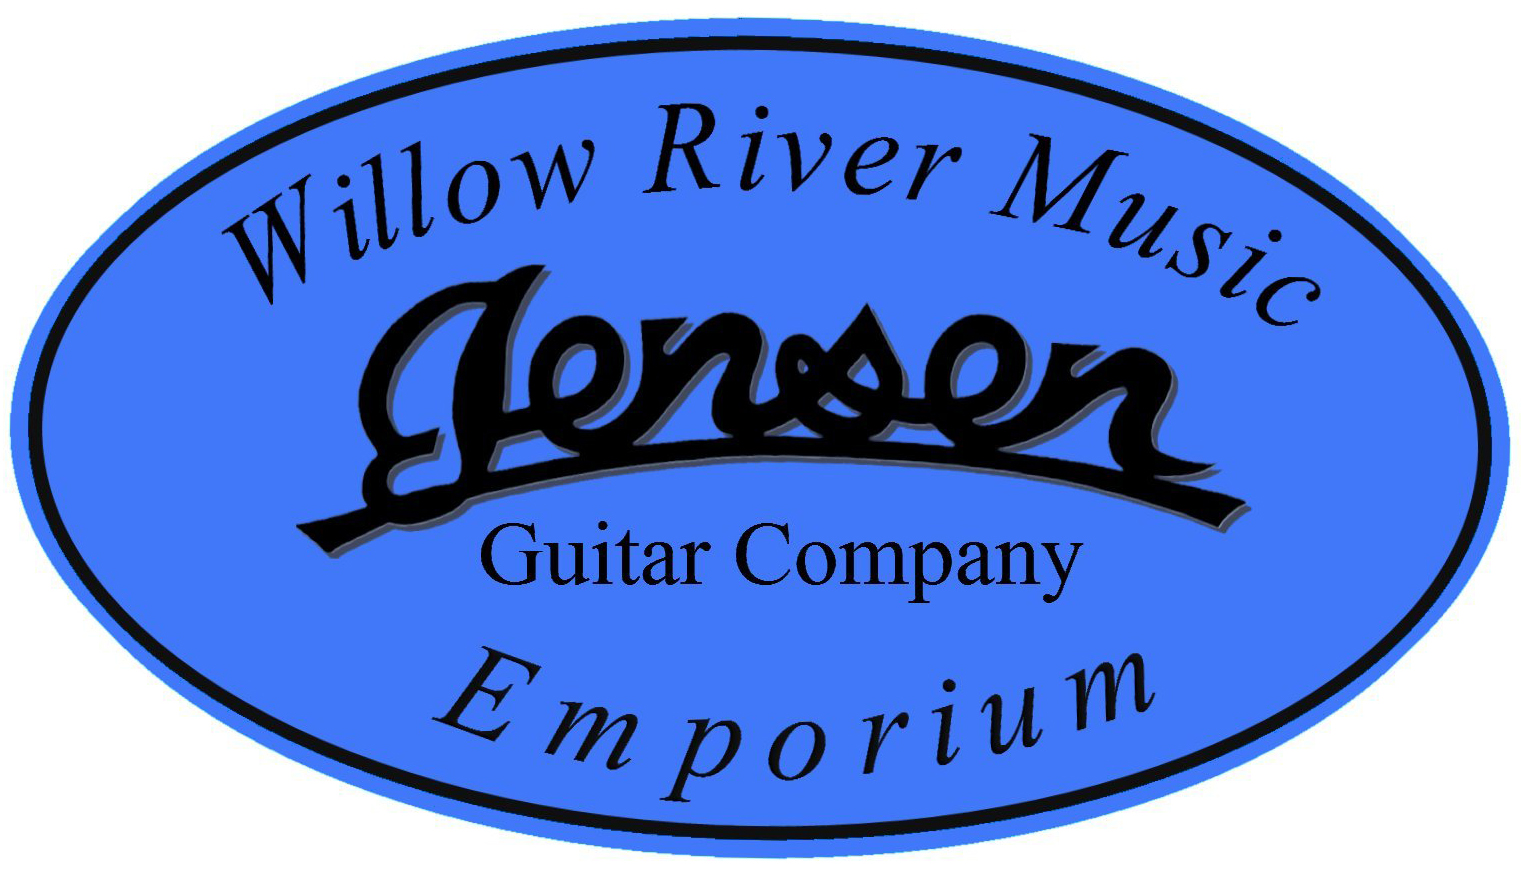 Jensen Guitar Company and Willow River Music Emporium